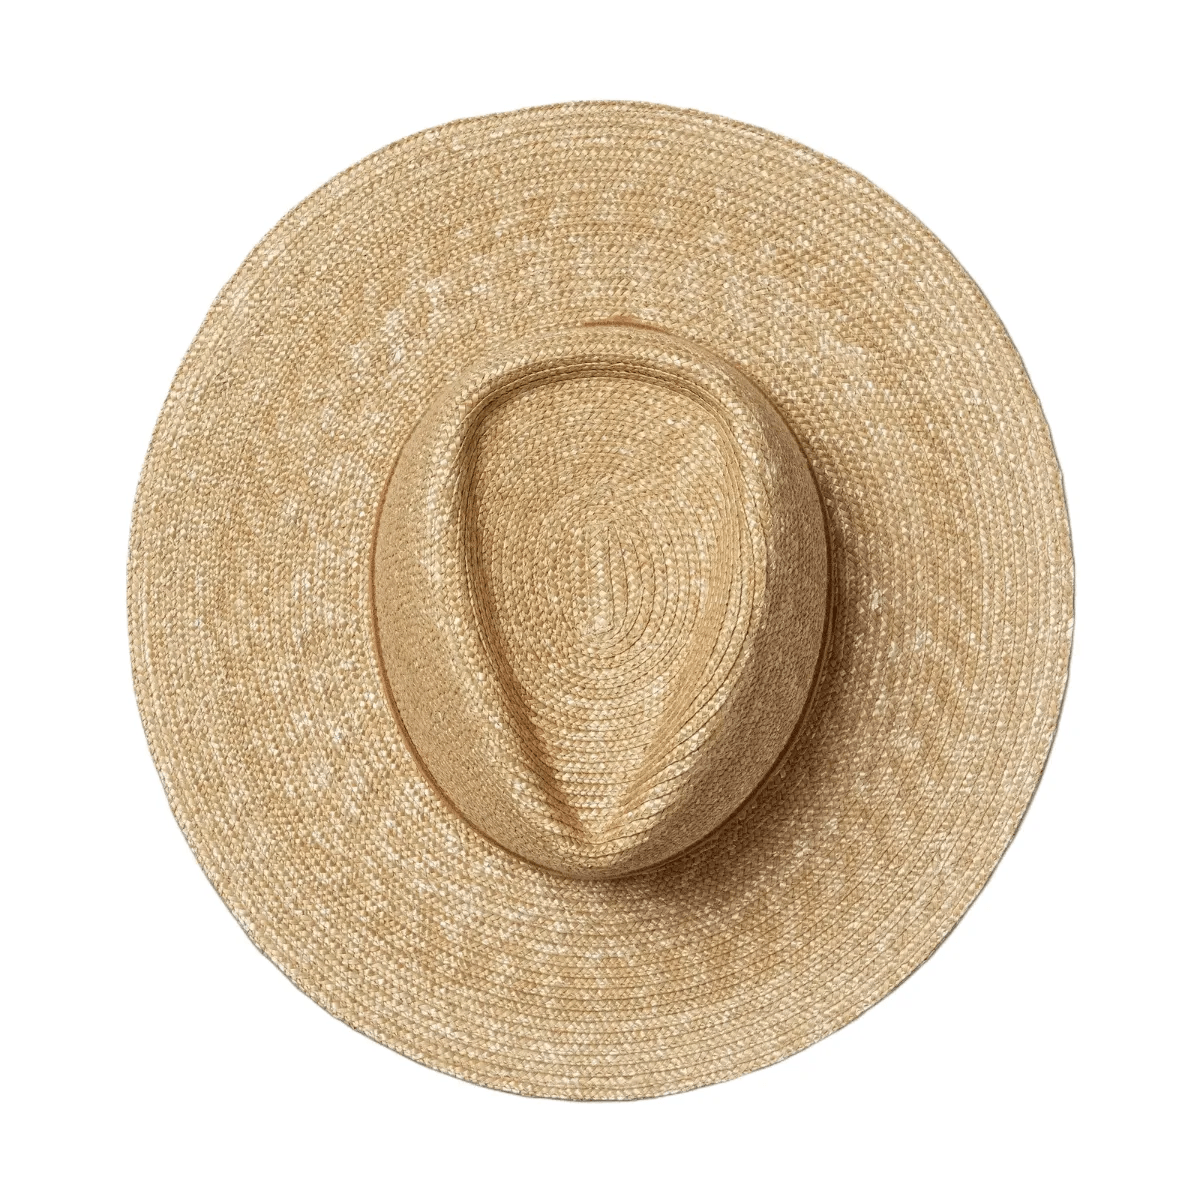 Hemlock Hat Co Sloan Straw Fedora Honeycomb S 55 cm